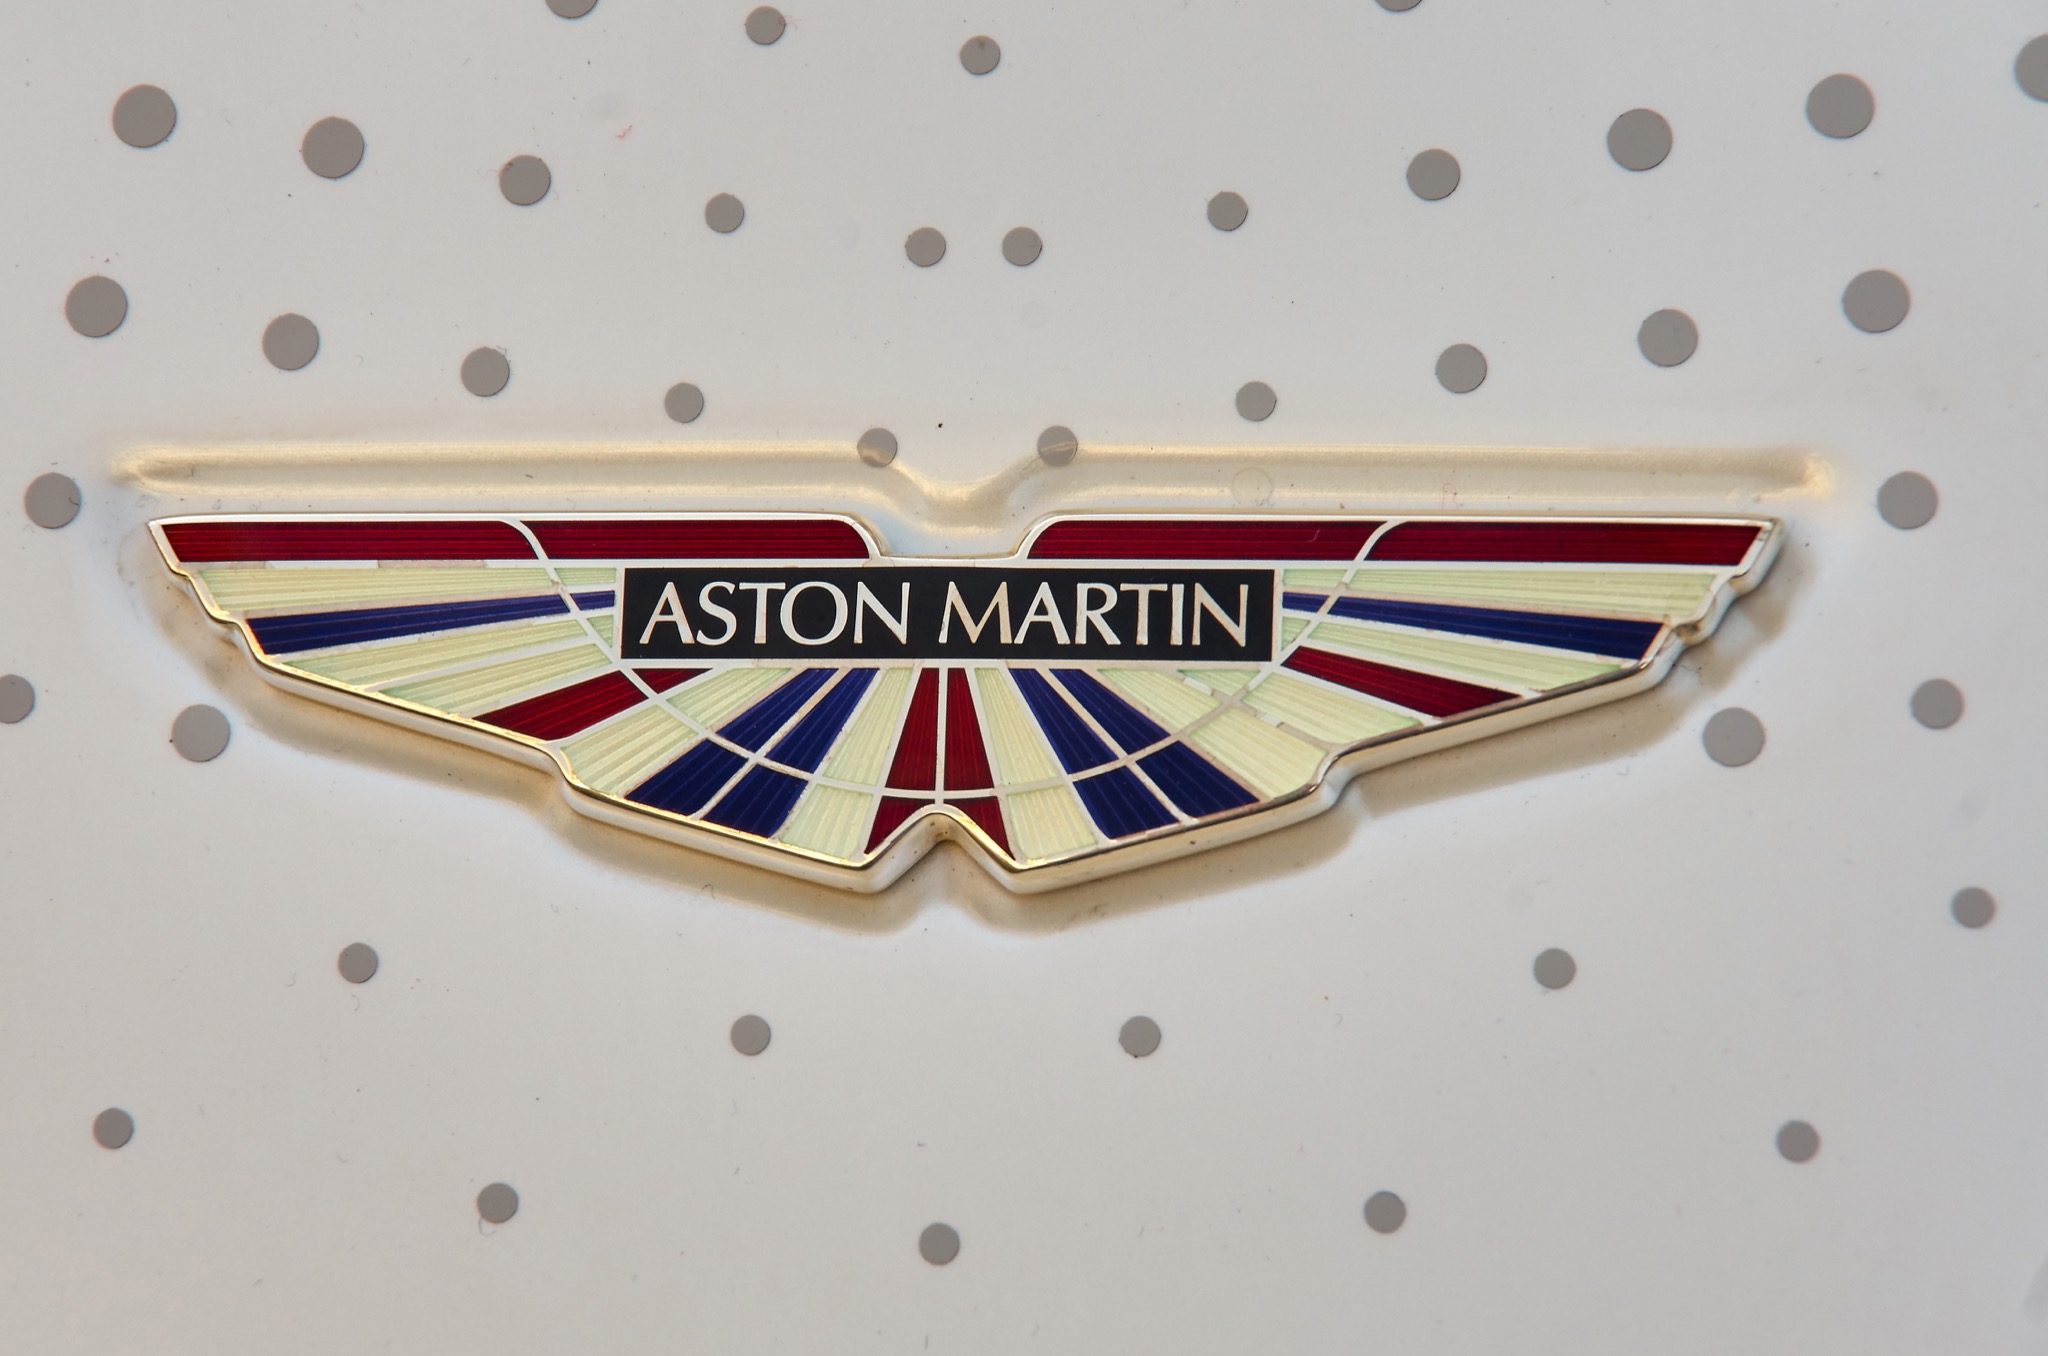 View of an Aston Martin logo